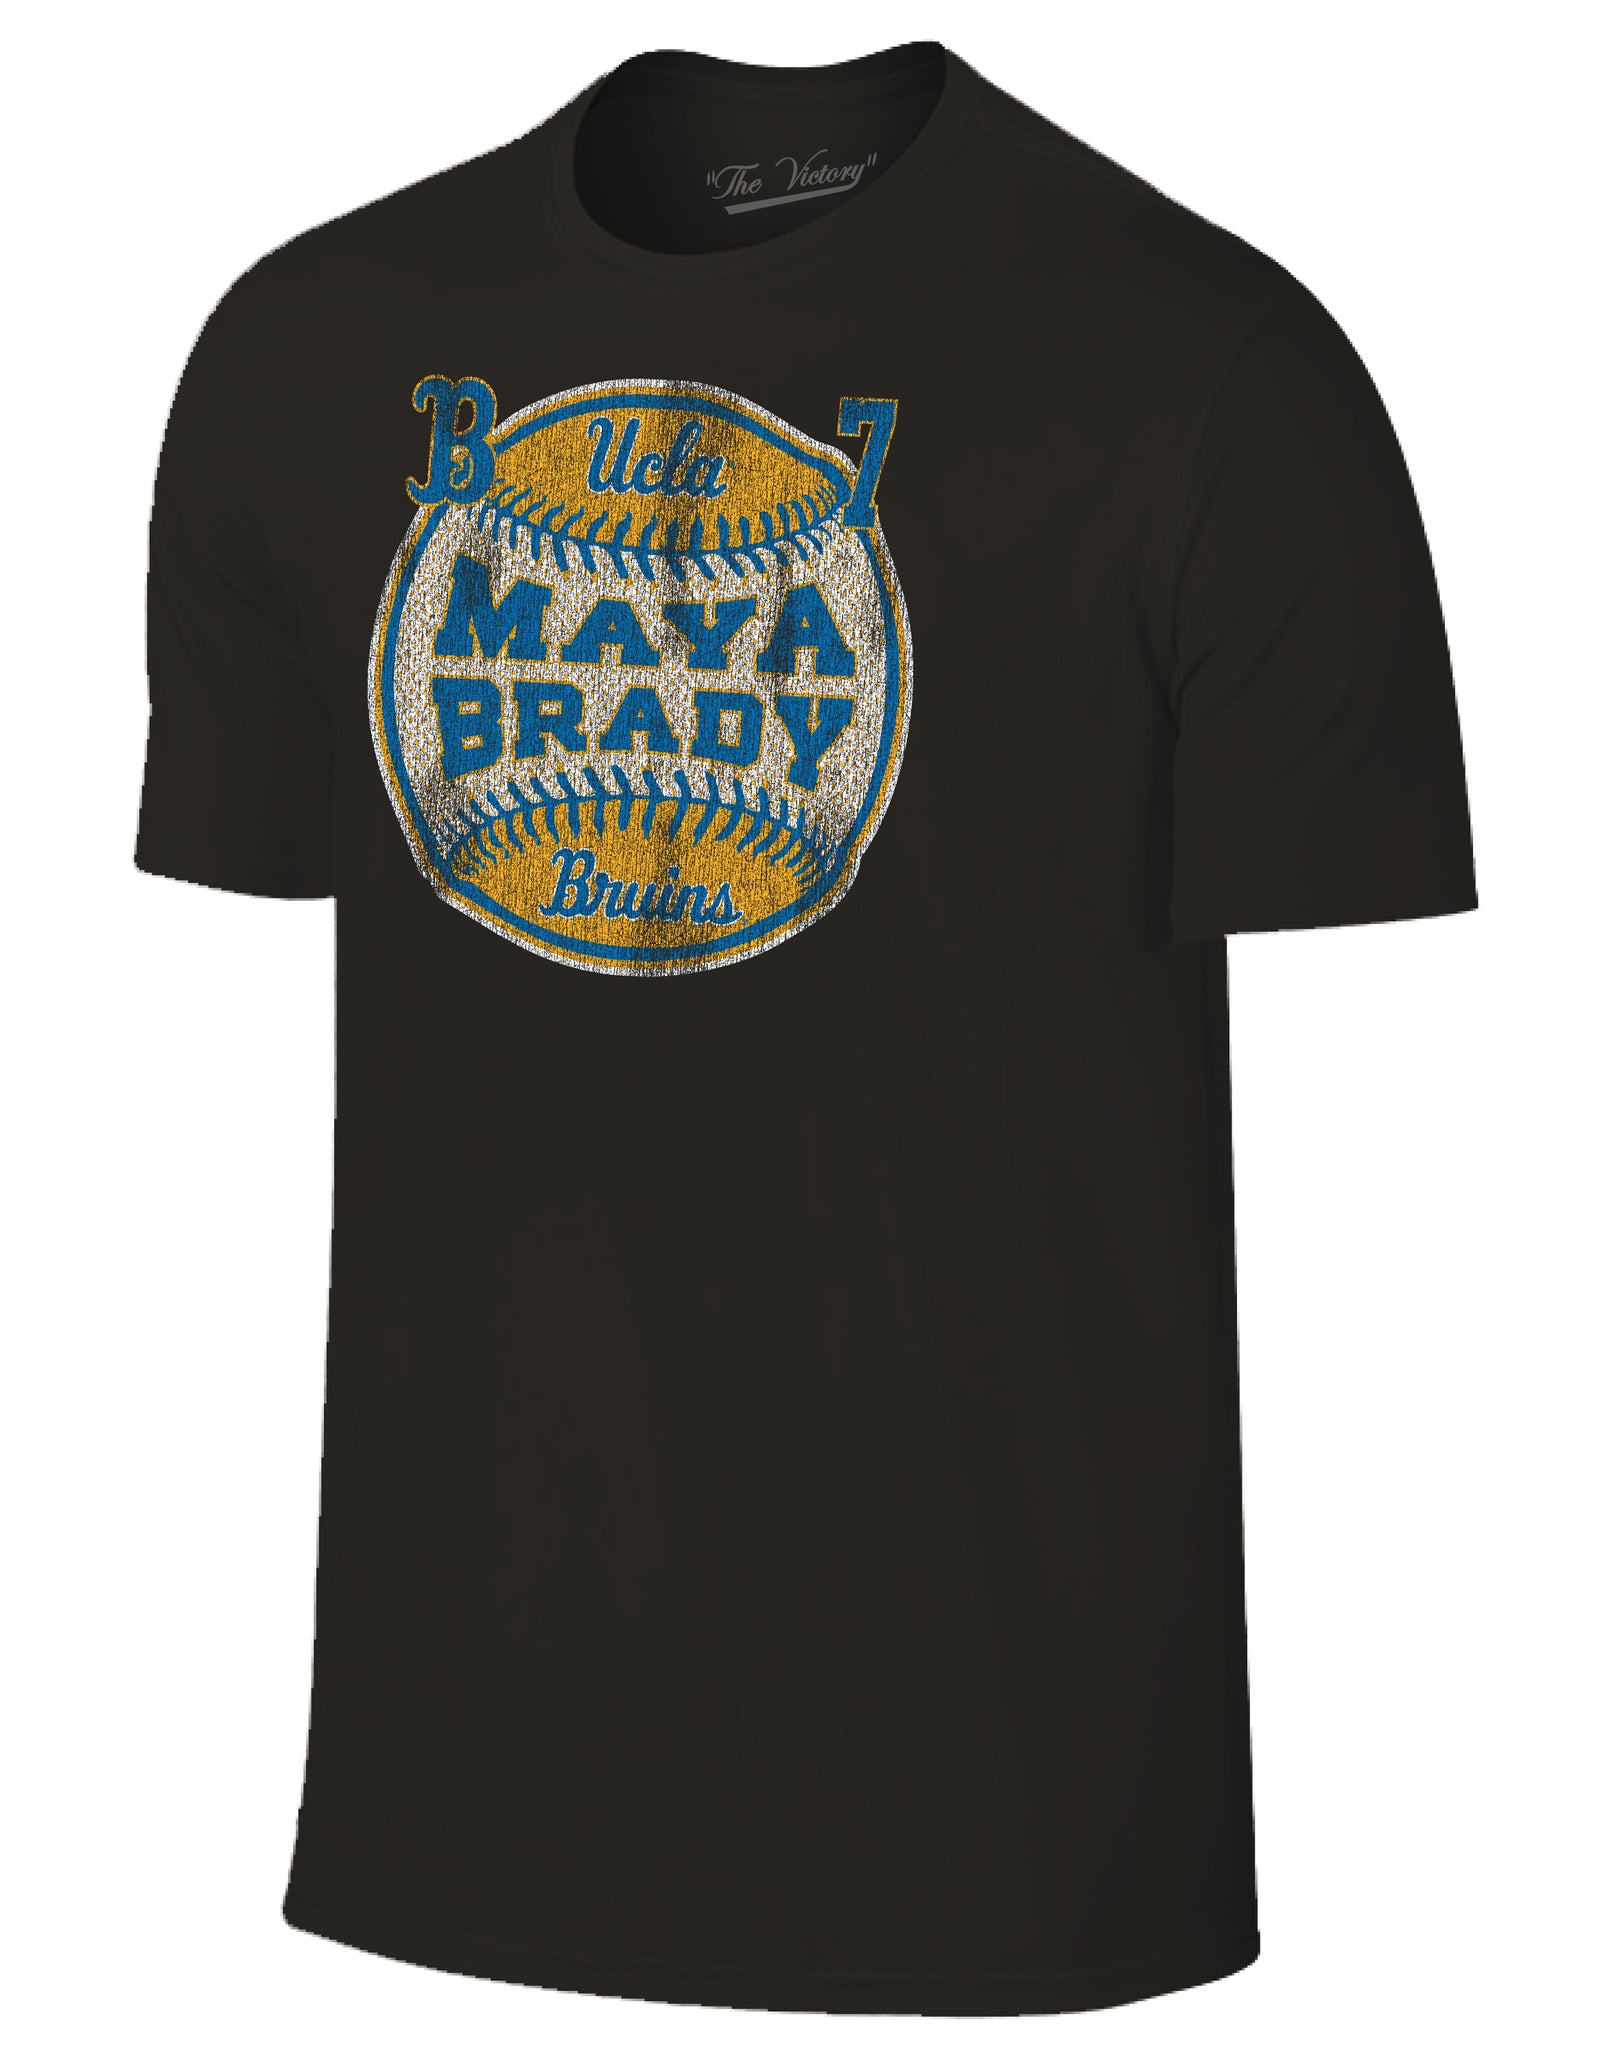 Maya Brady UCLA Bruins Baller Tee